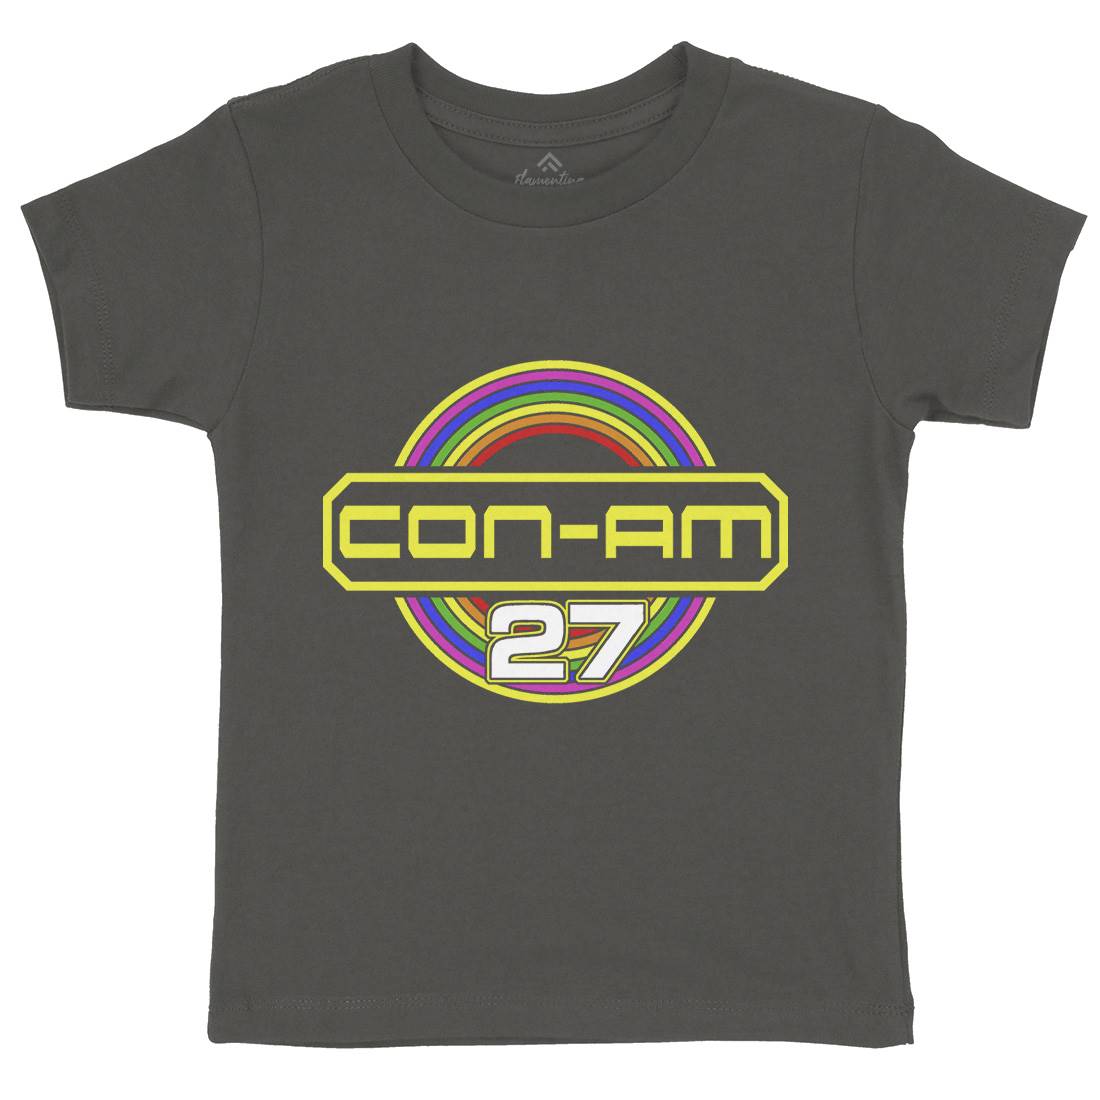 Con-Am 27 Kids Organic Crew Neck T-Shirt Space D414